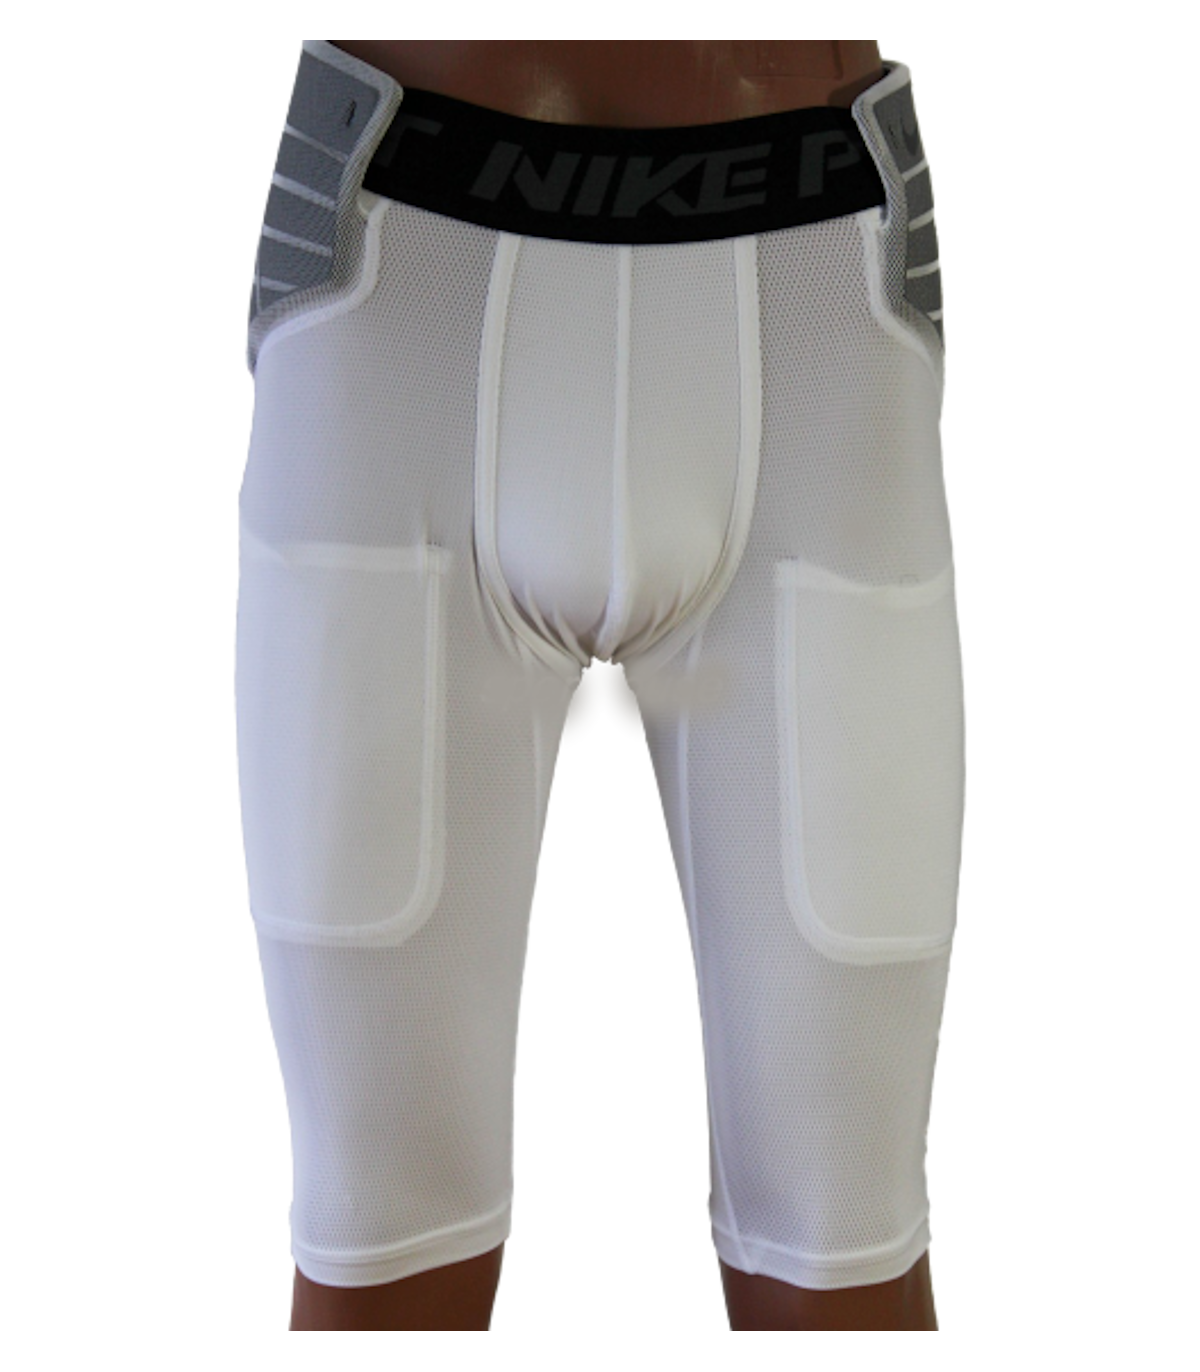 nike pro combat underwear